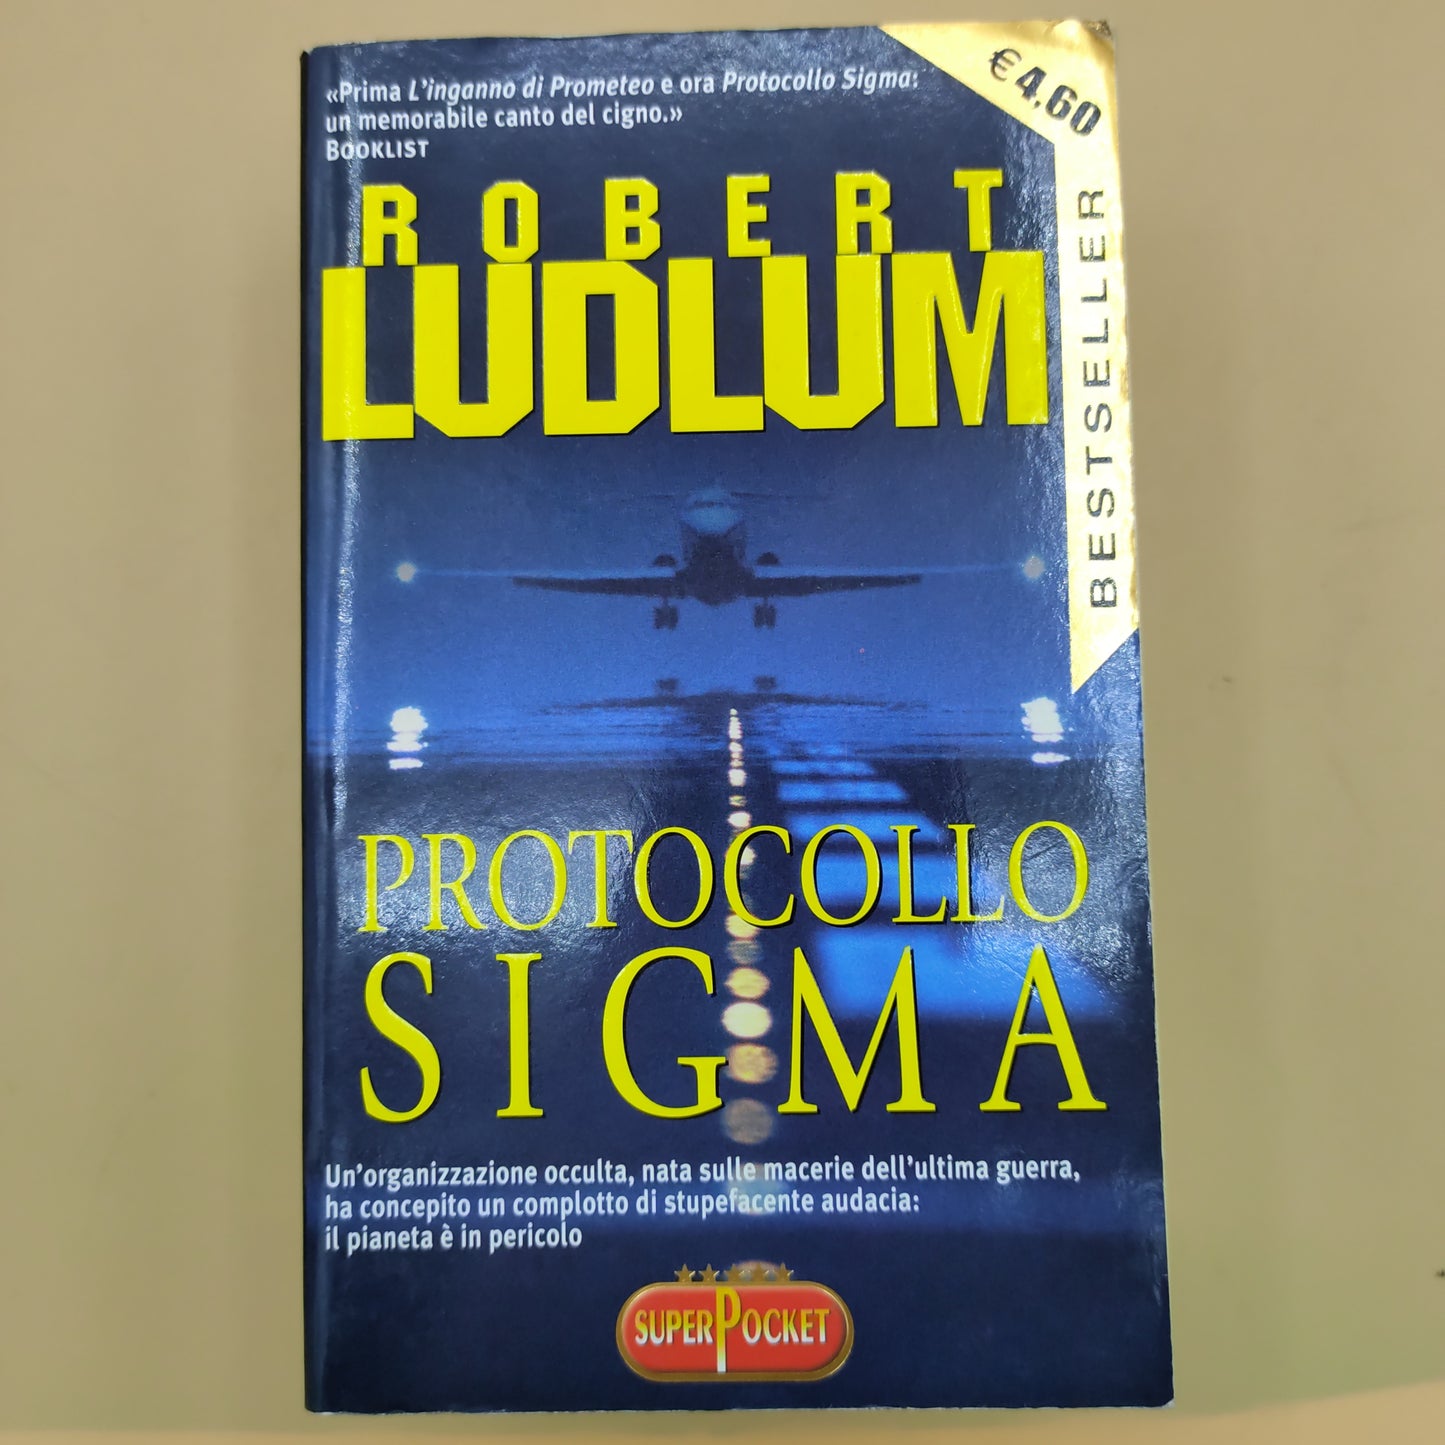 Protocollo stigma - Robert Ludlum